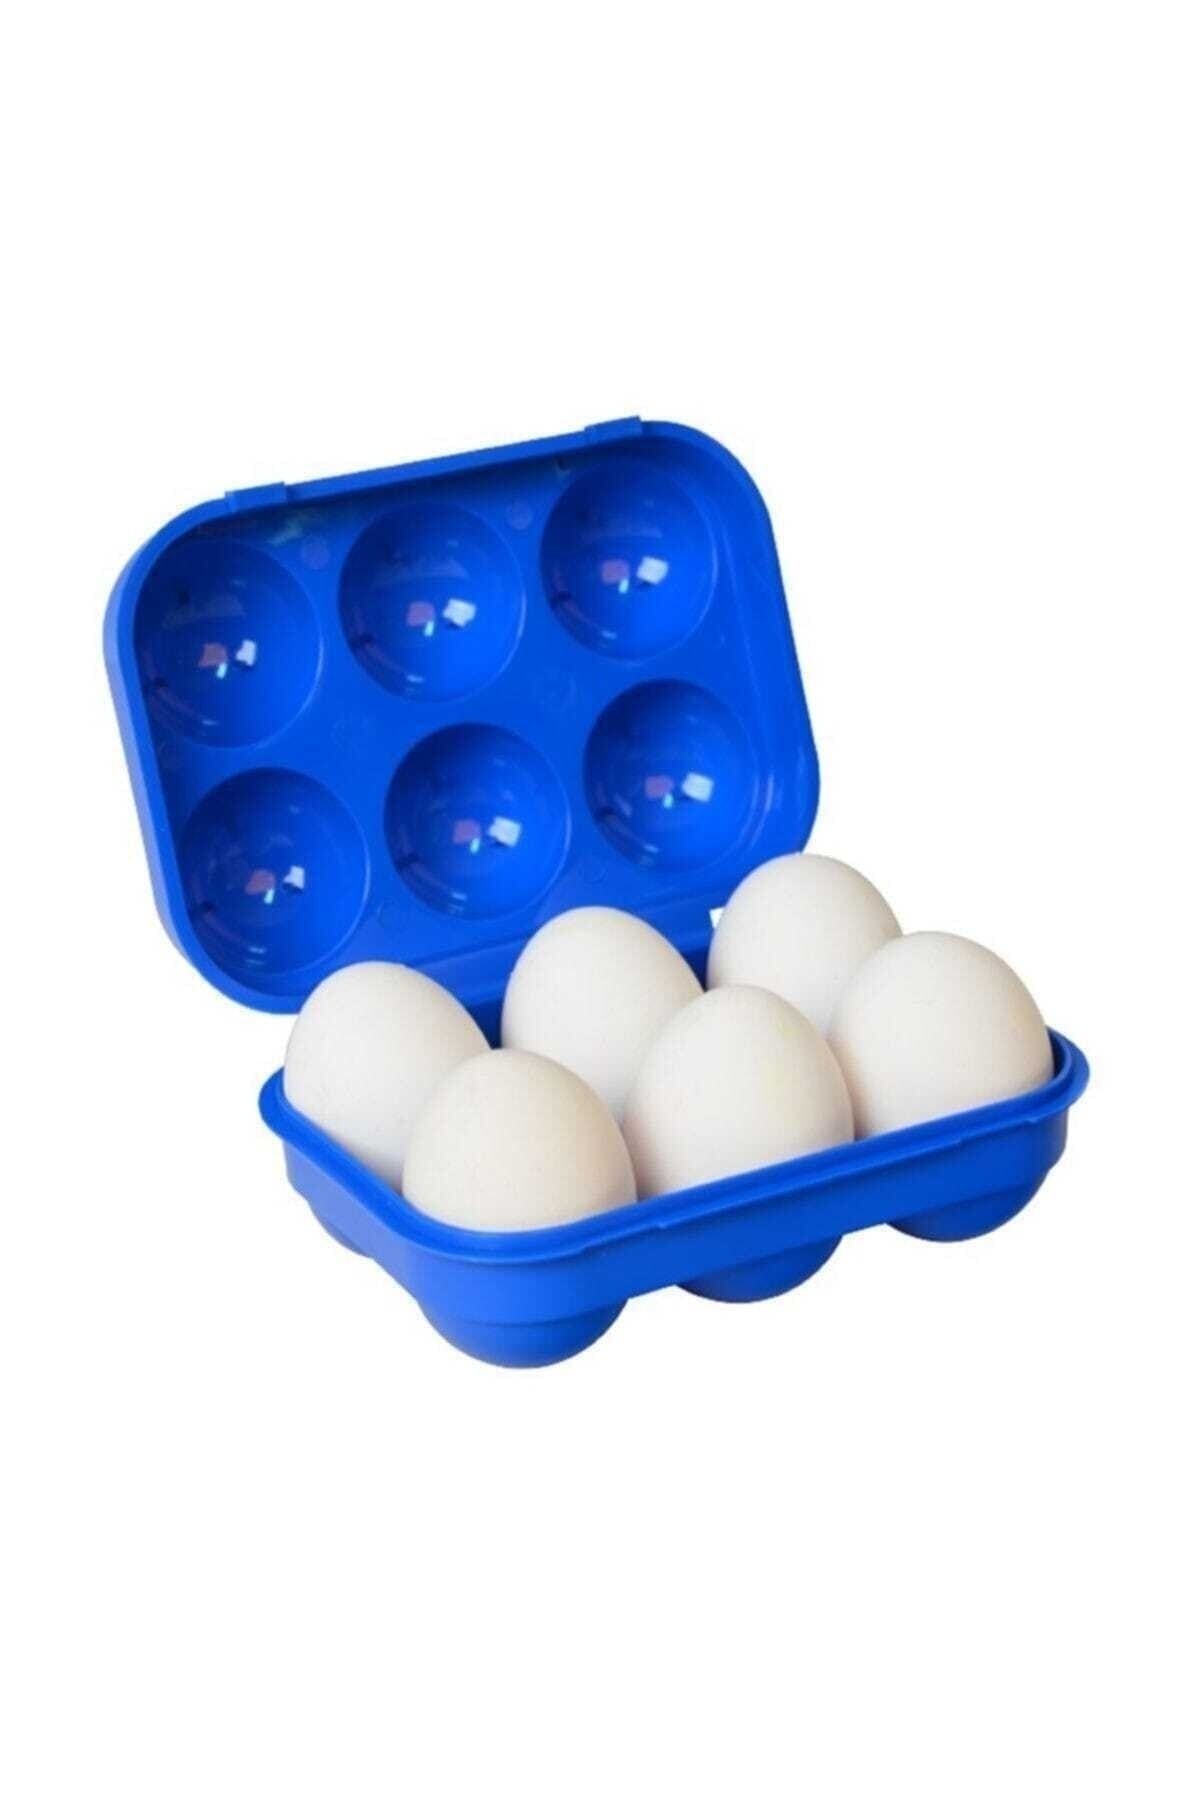 Nurgaz Yumurta Saklama Kabı